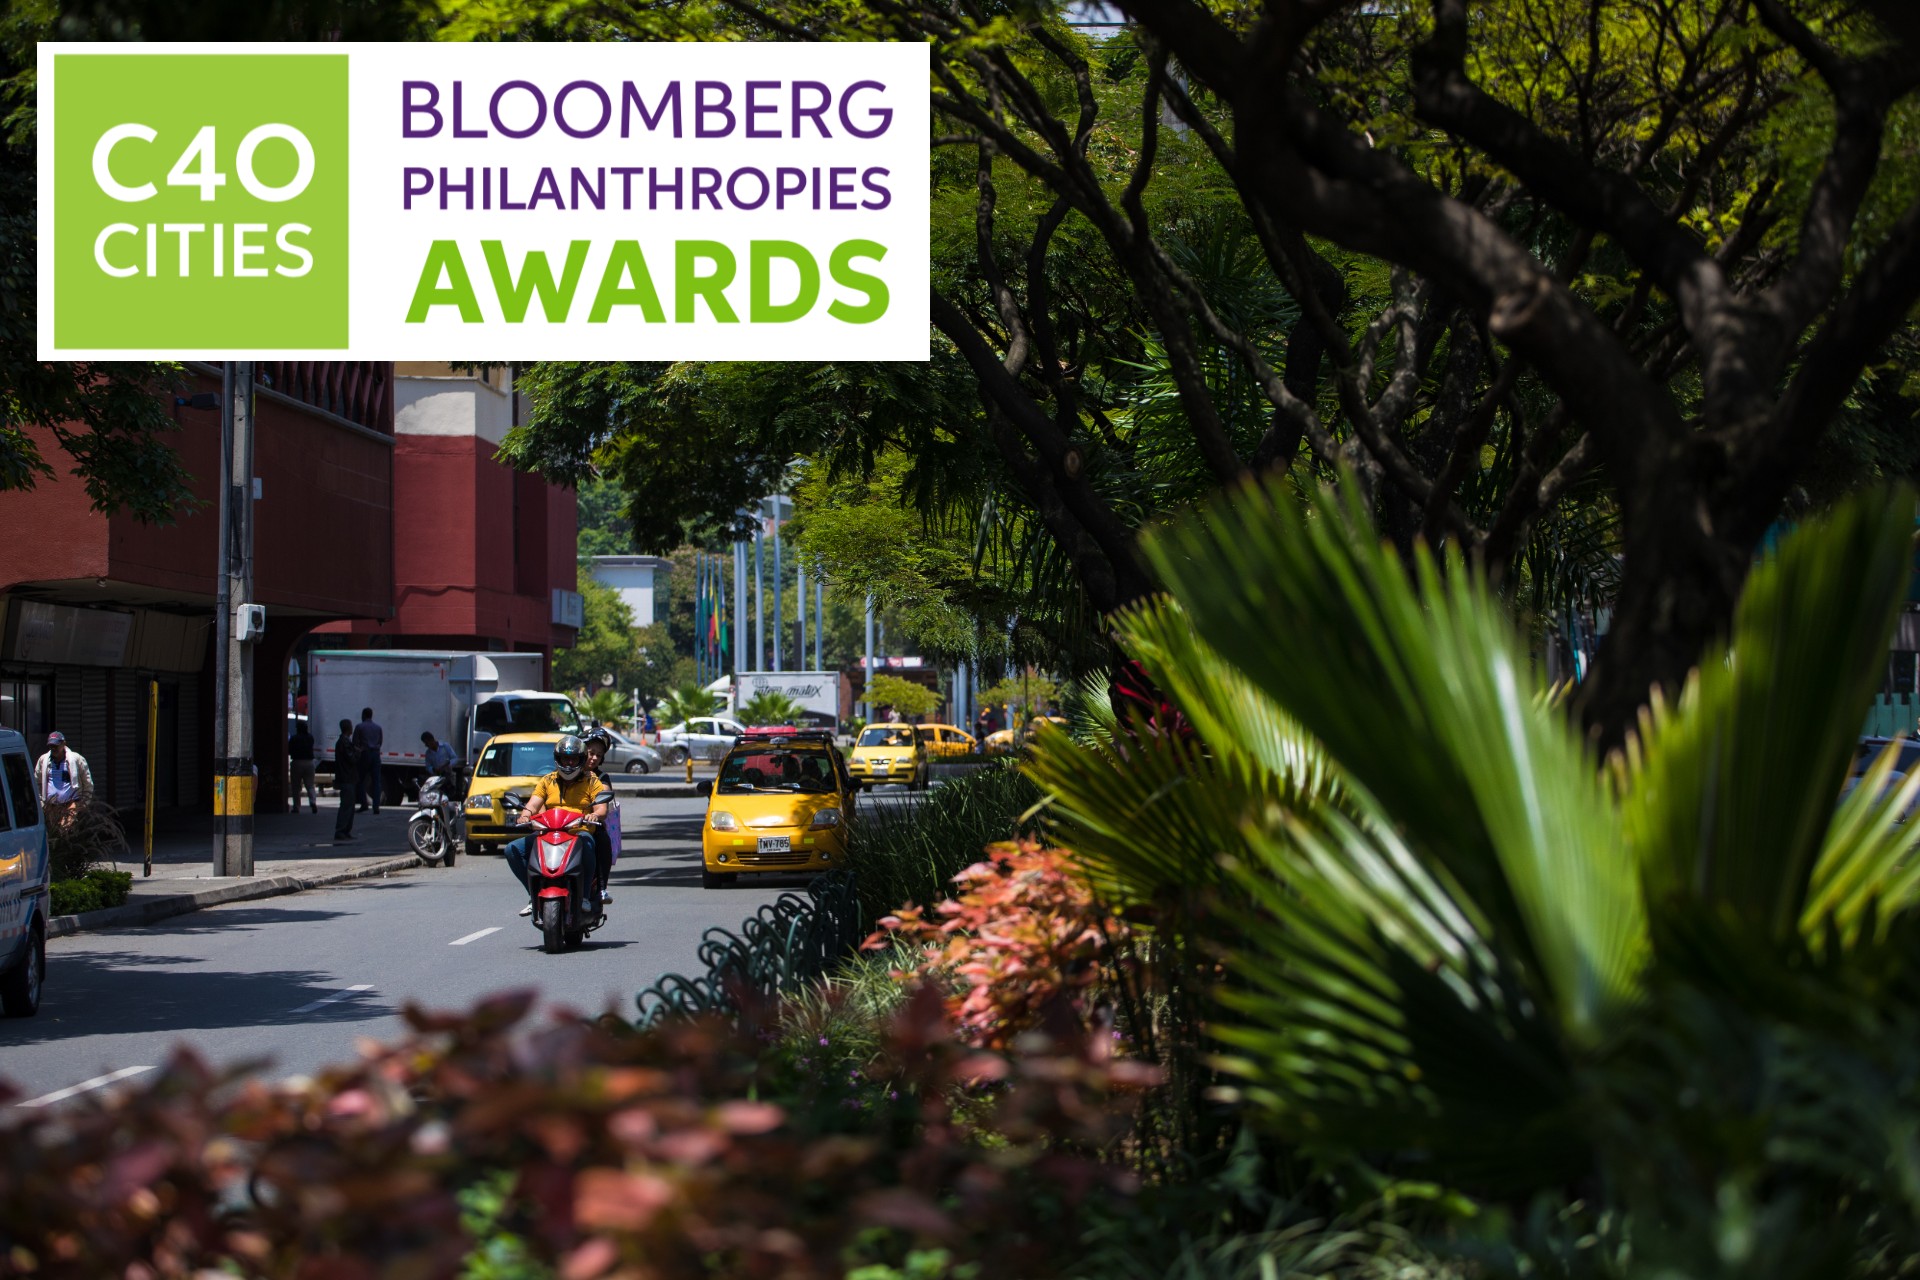 Premio Bloomberg Philanthropies Awards